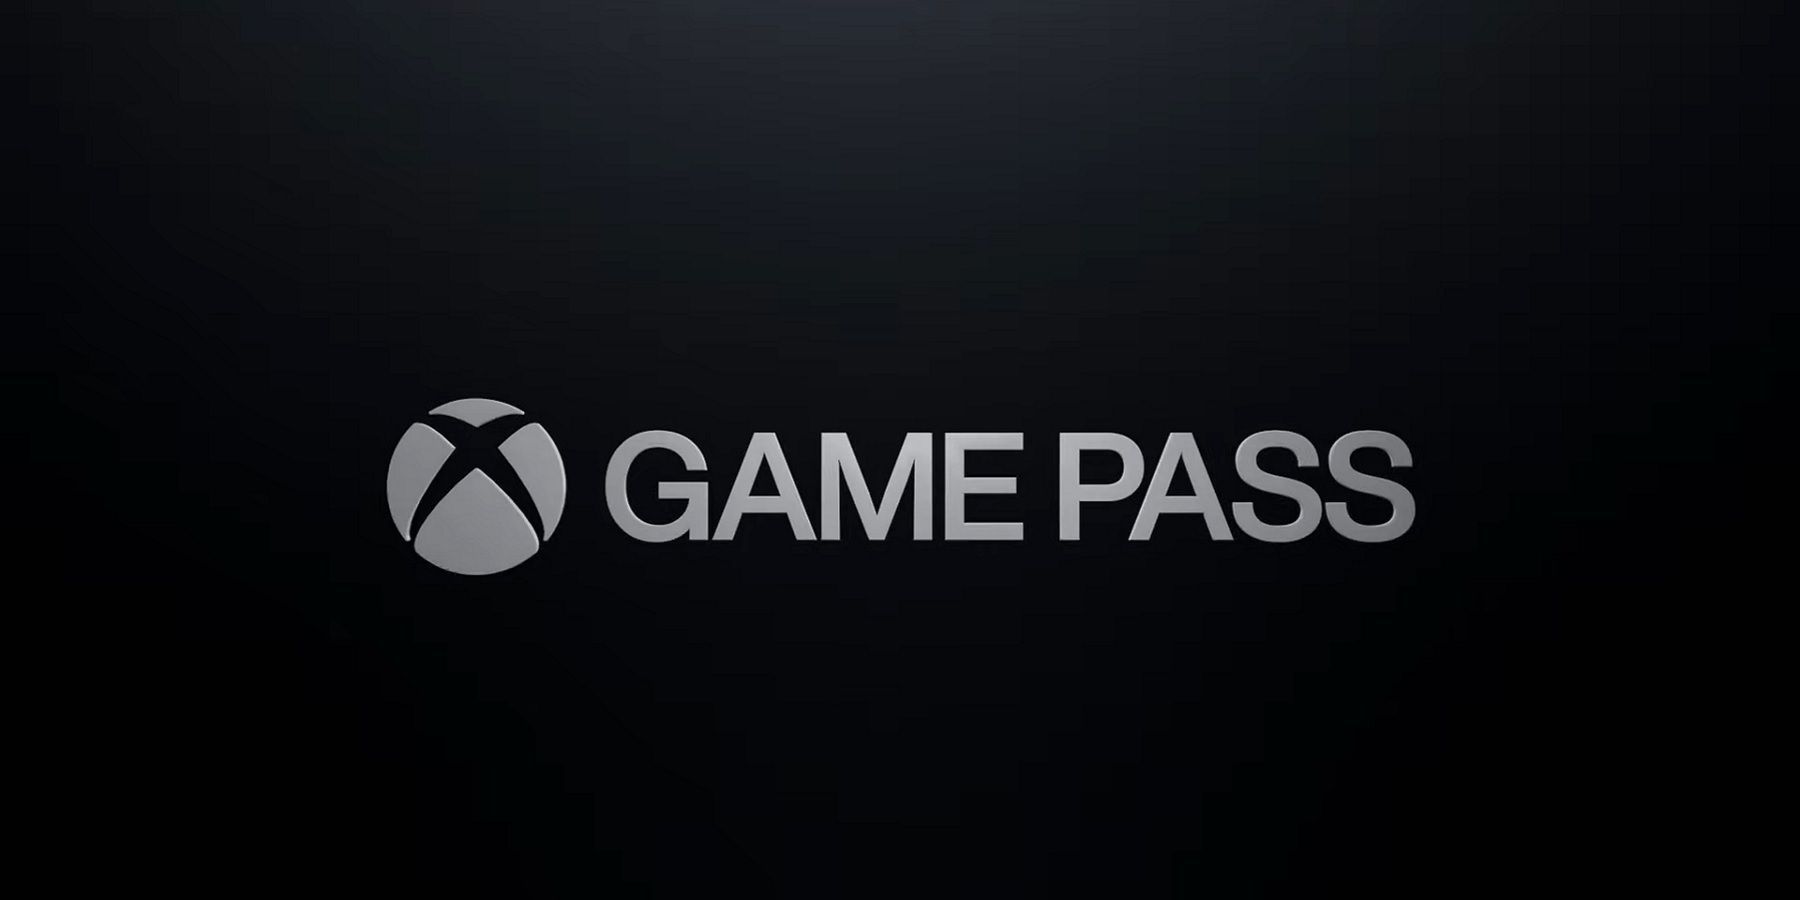 xbox game pass logo noir et blanc (2)